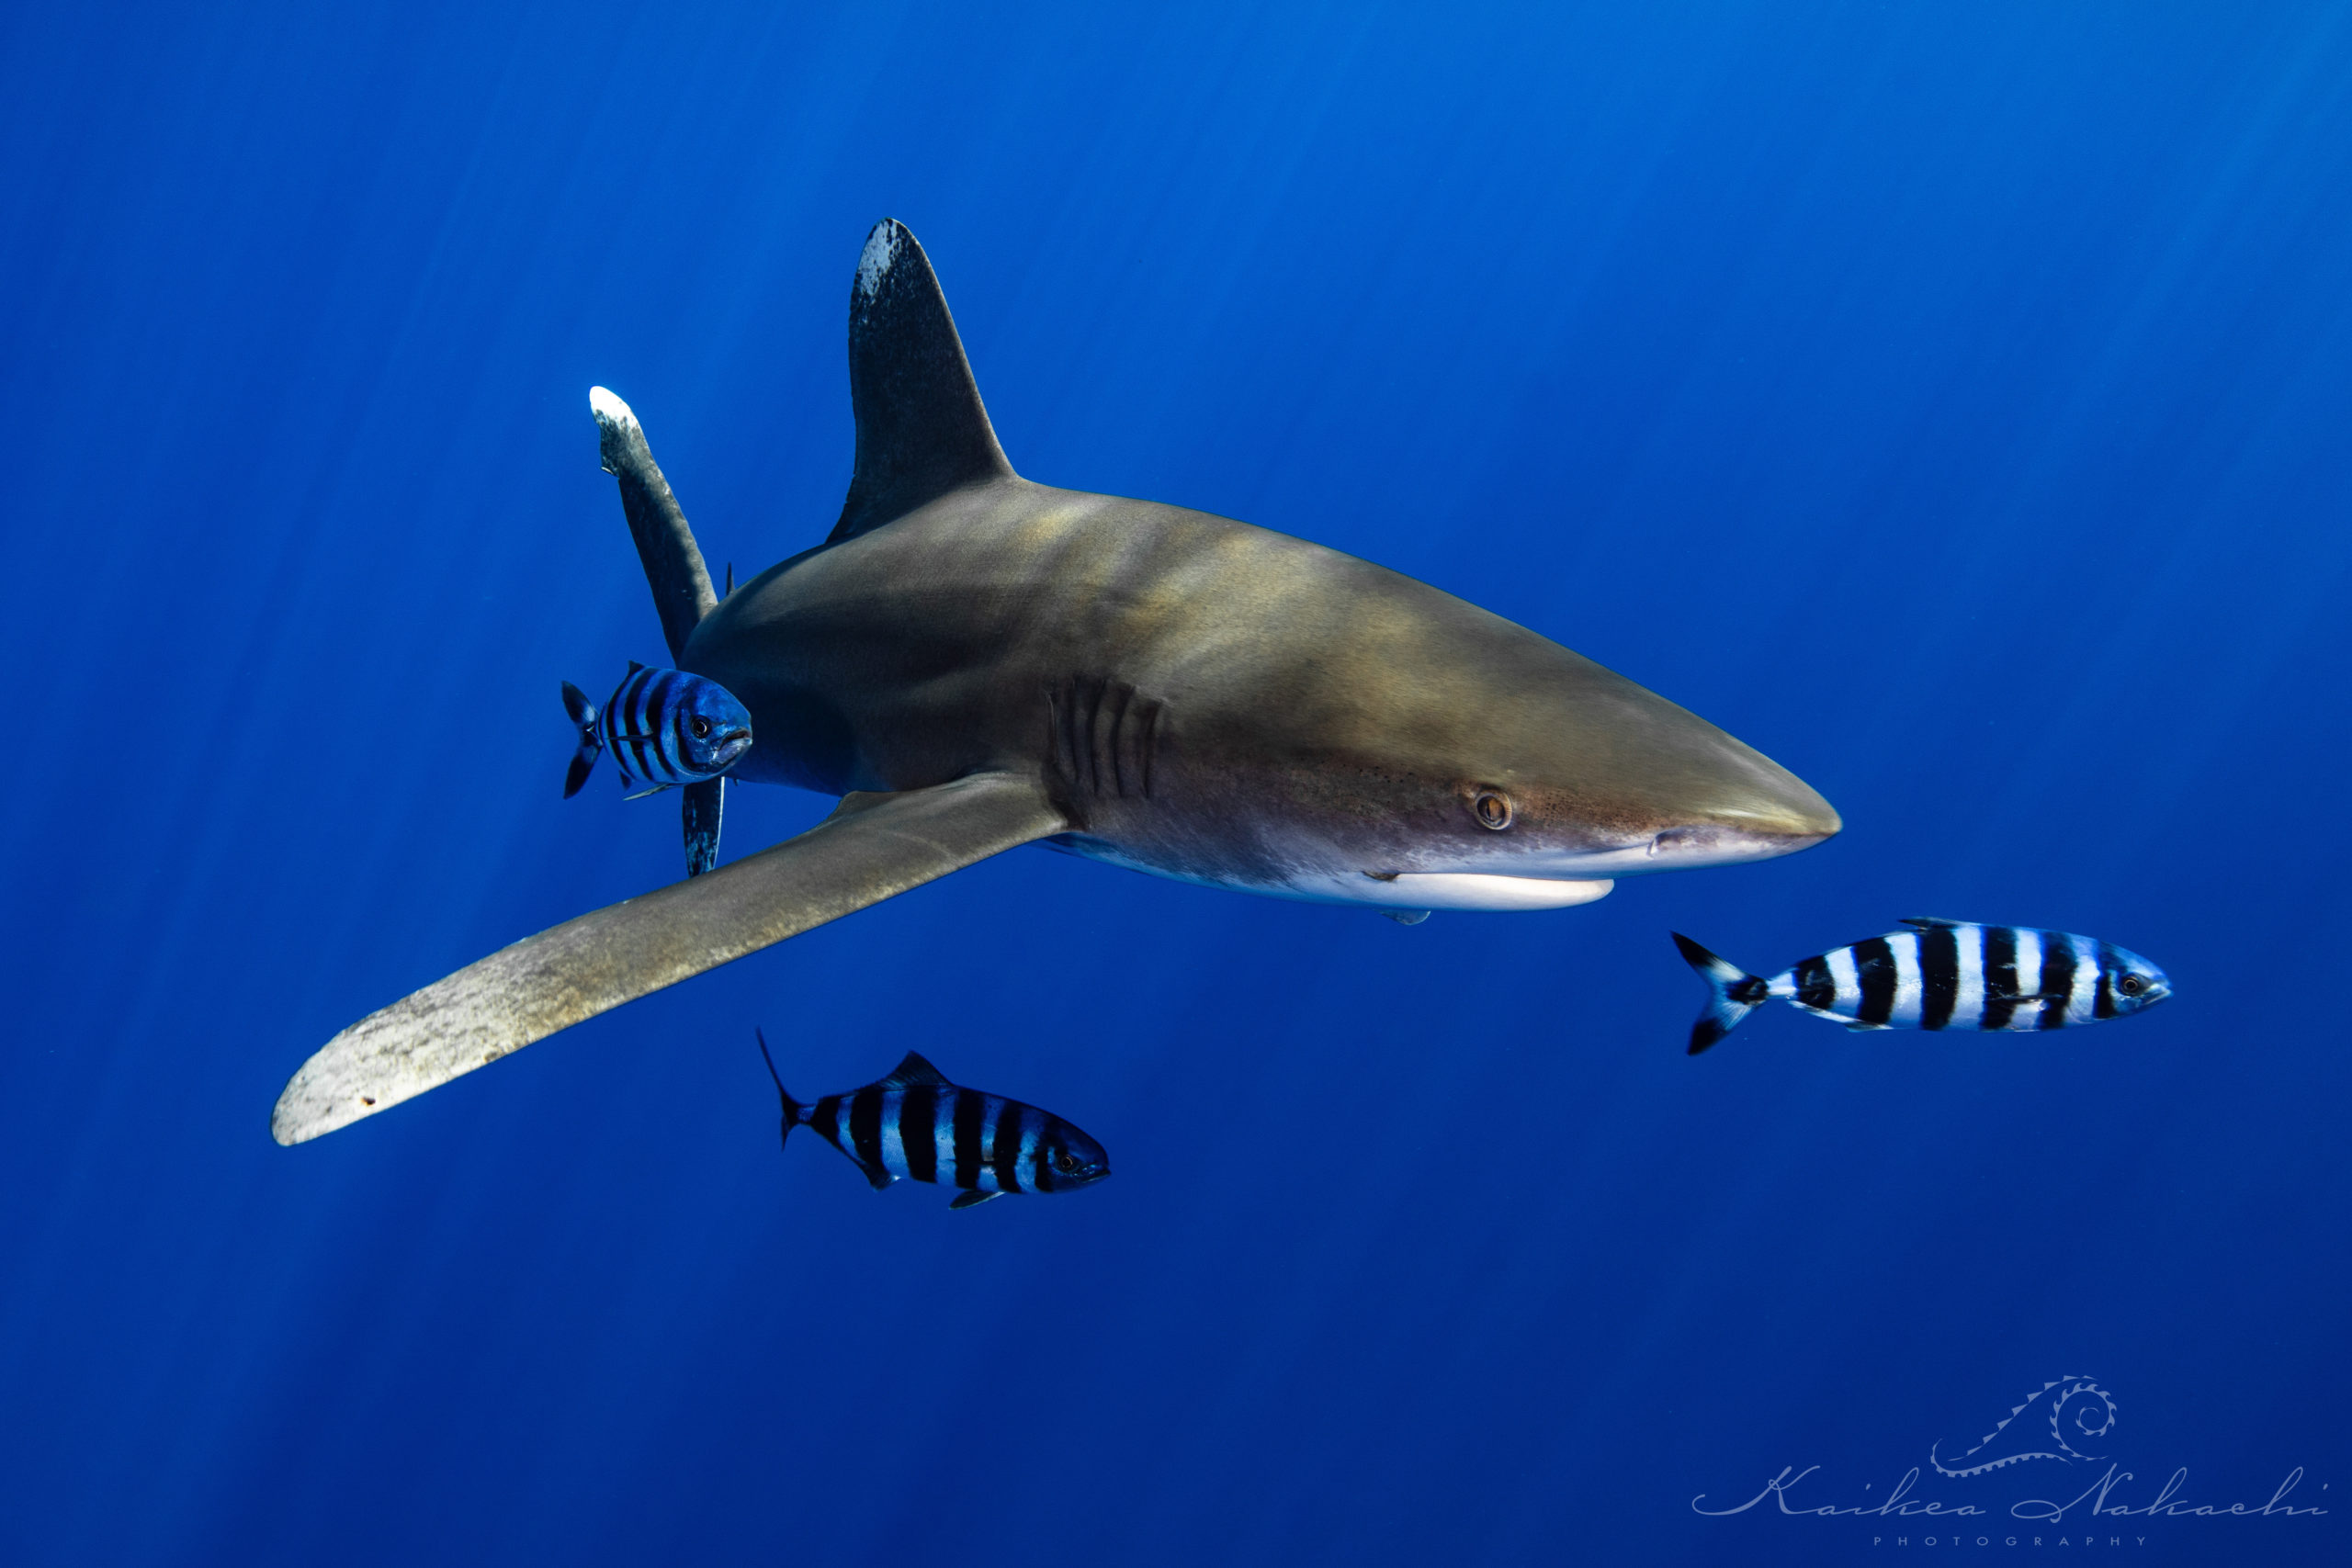 White tip shark in water.